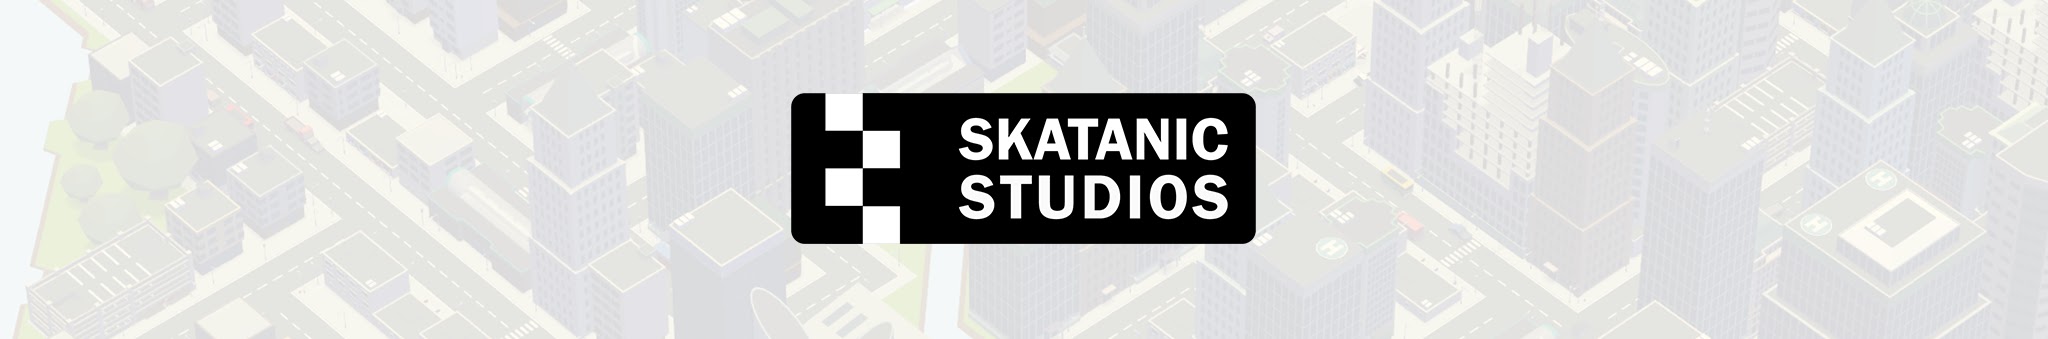 Skatanic Studios